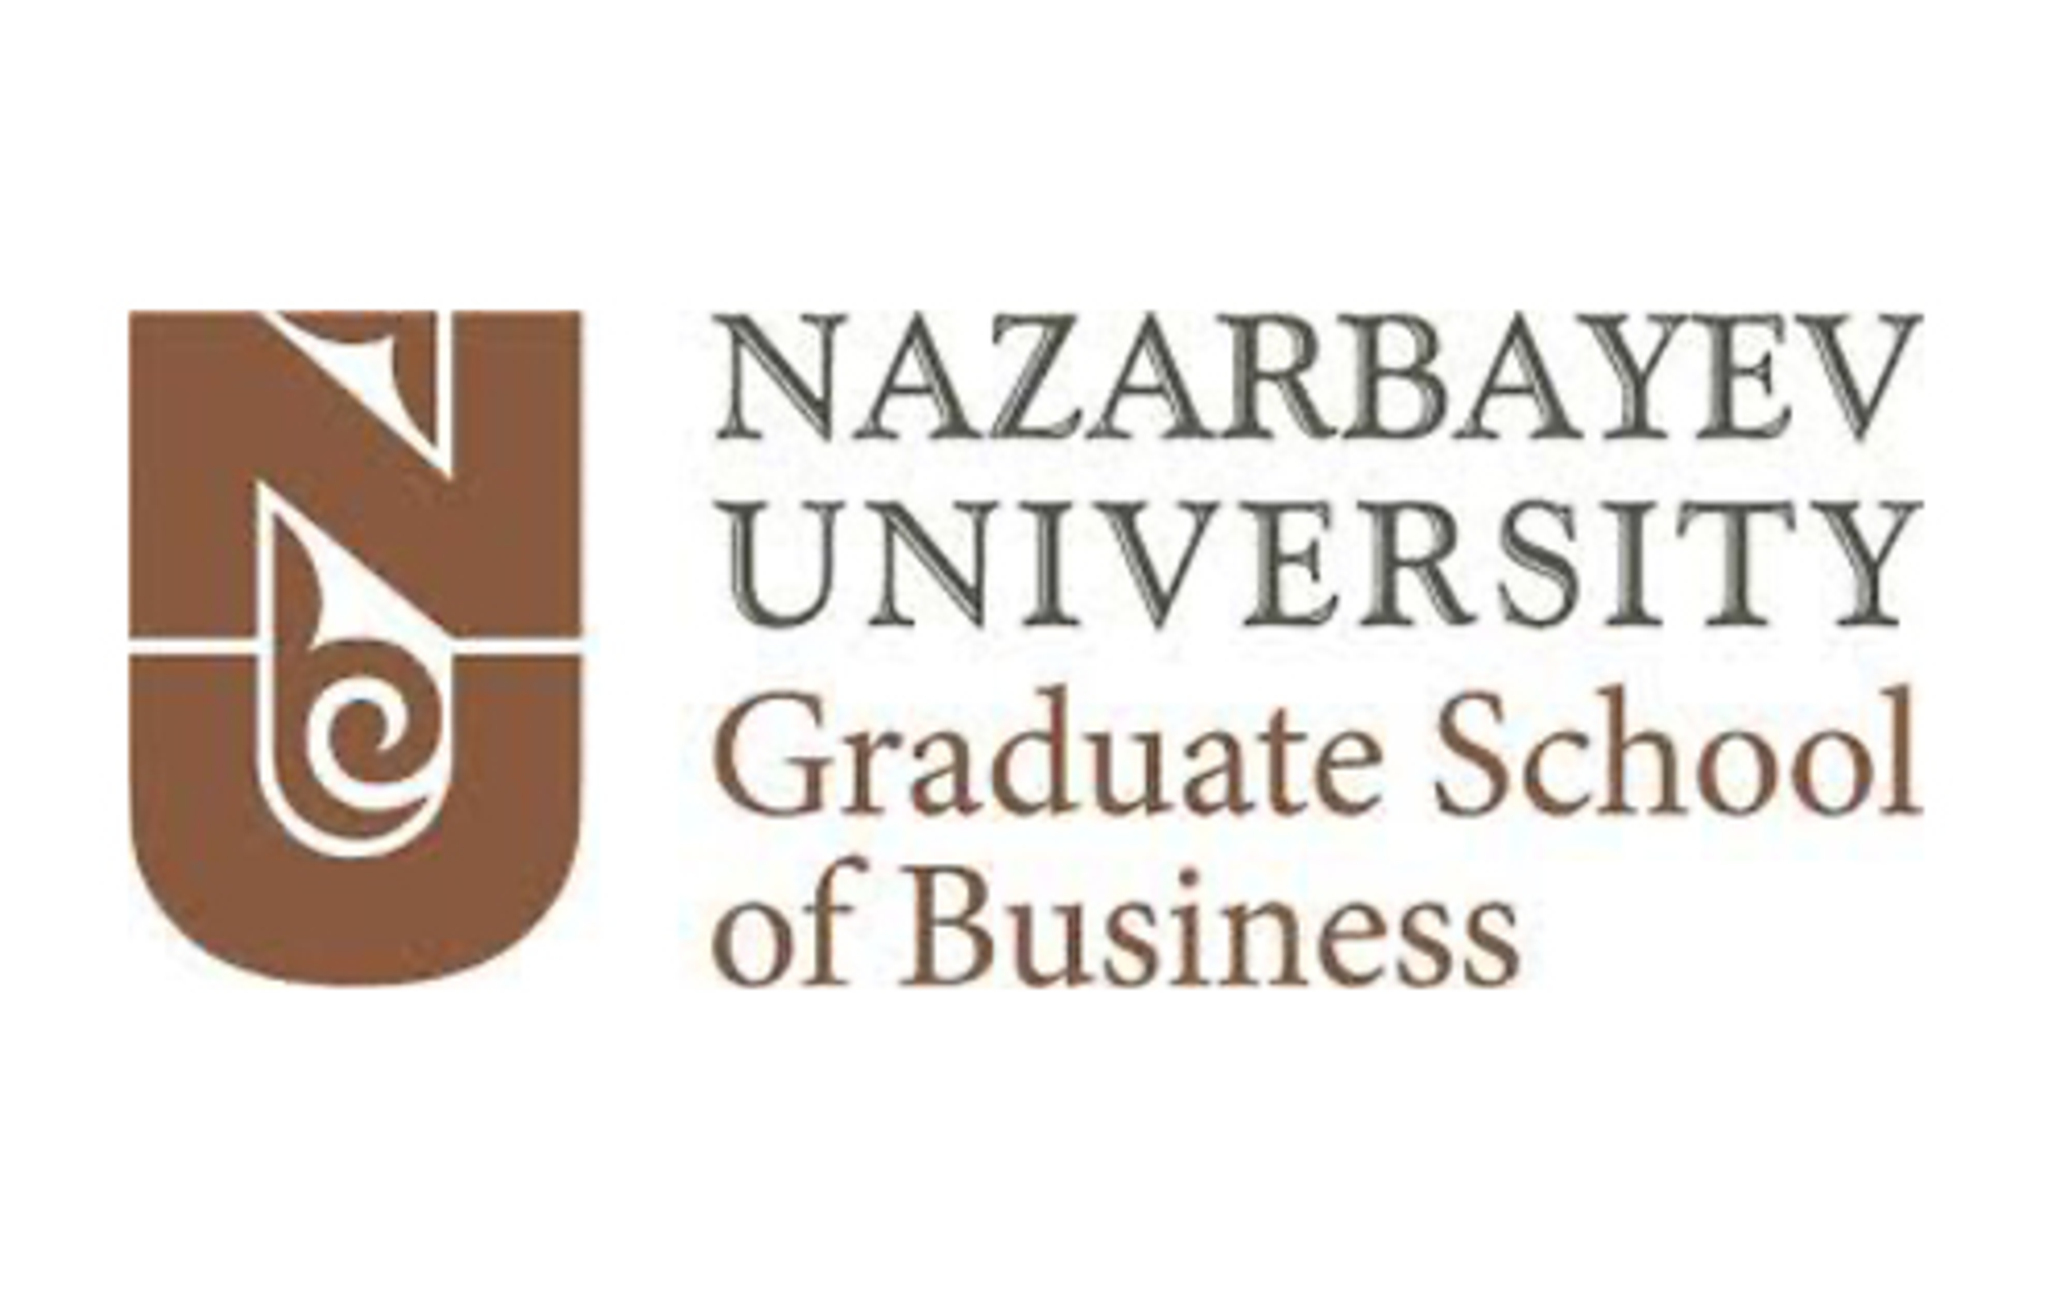 NAZARBAYEV UNIVERSITY GRADUATE SCHOOL OF BUSINESS Logo